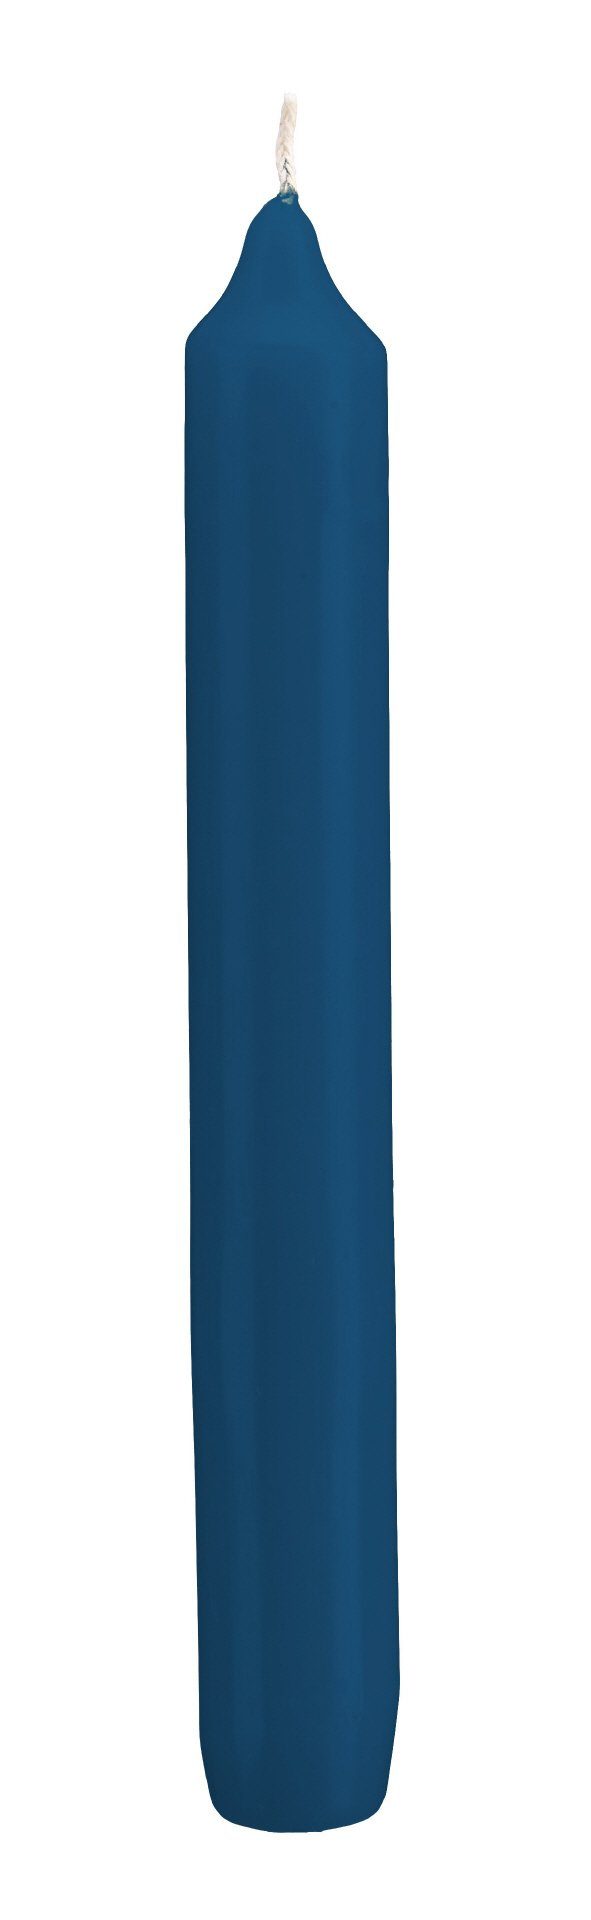 Kopschitz Kerzen Tafelkerze Leuchterkerzen Petrol Blau 200 x Ø 25 mm, 32 Stück